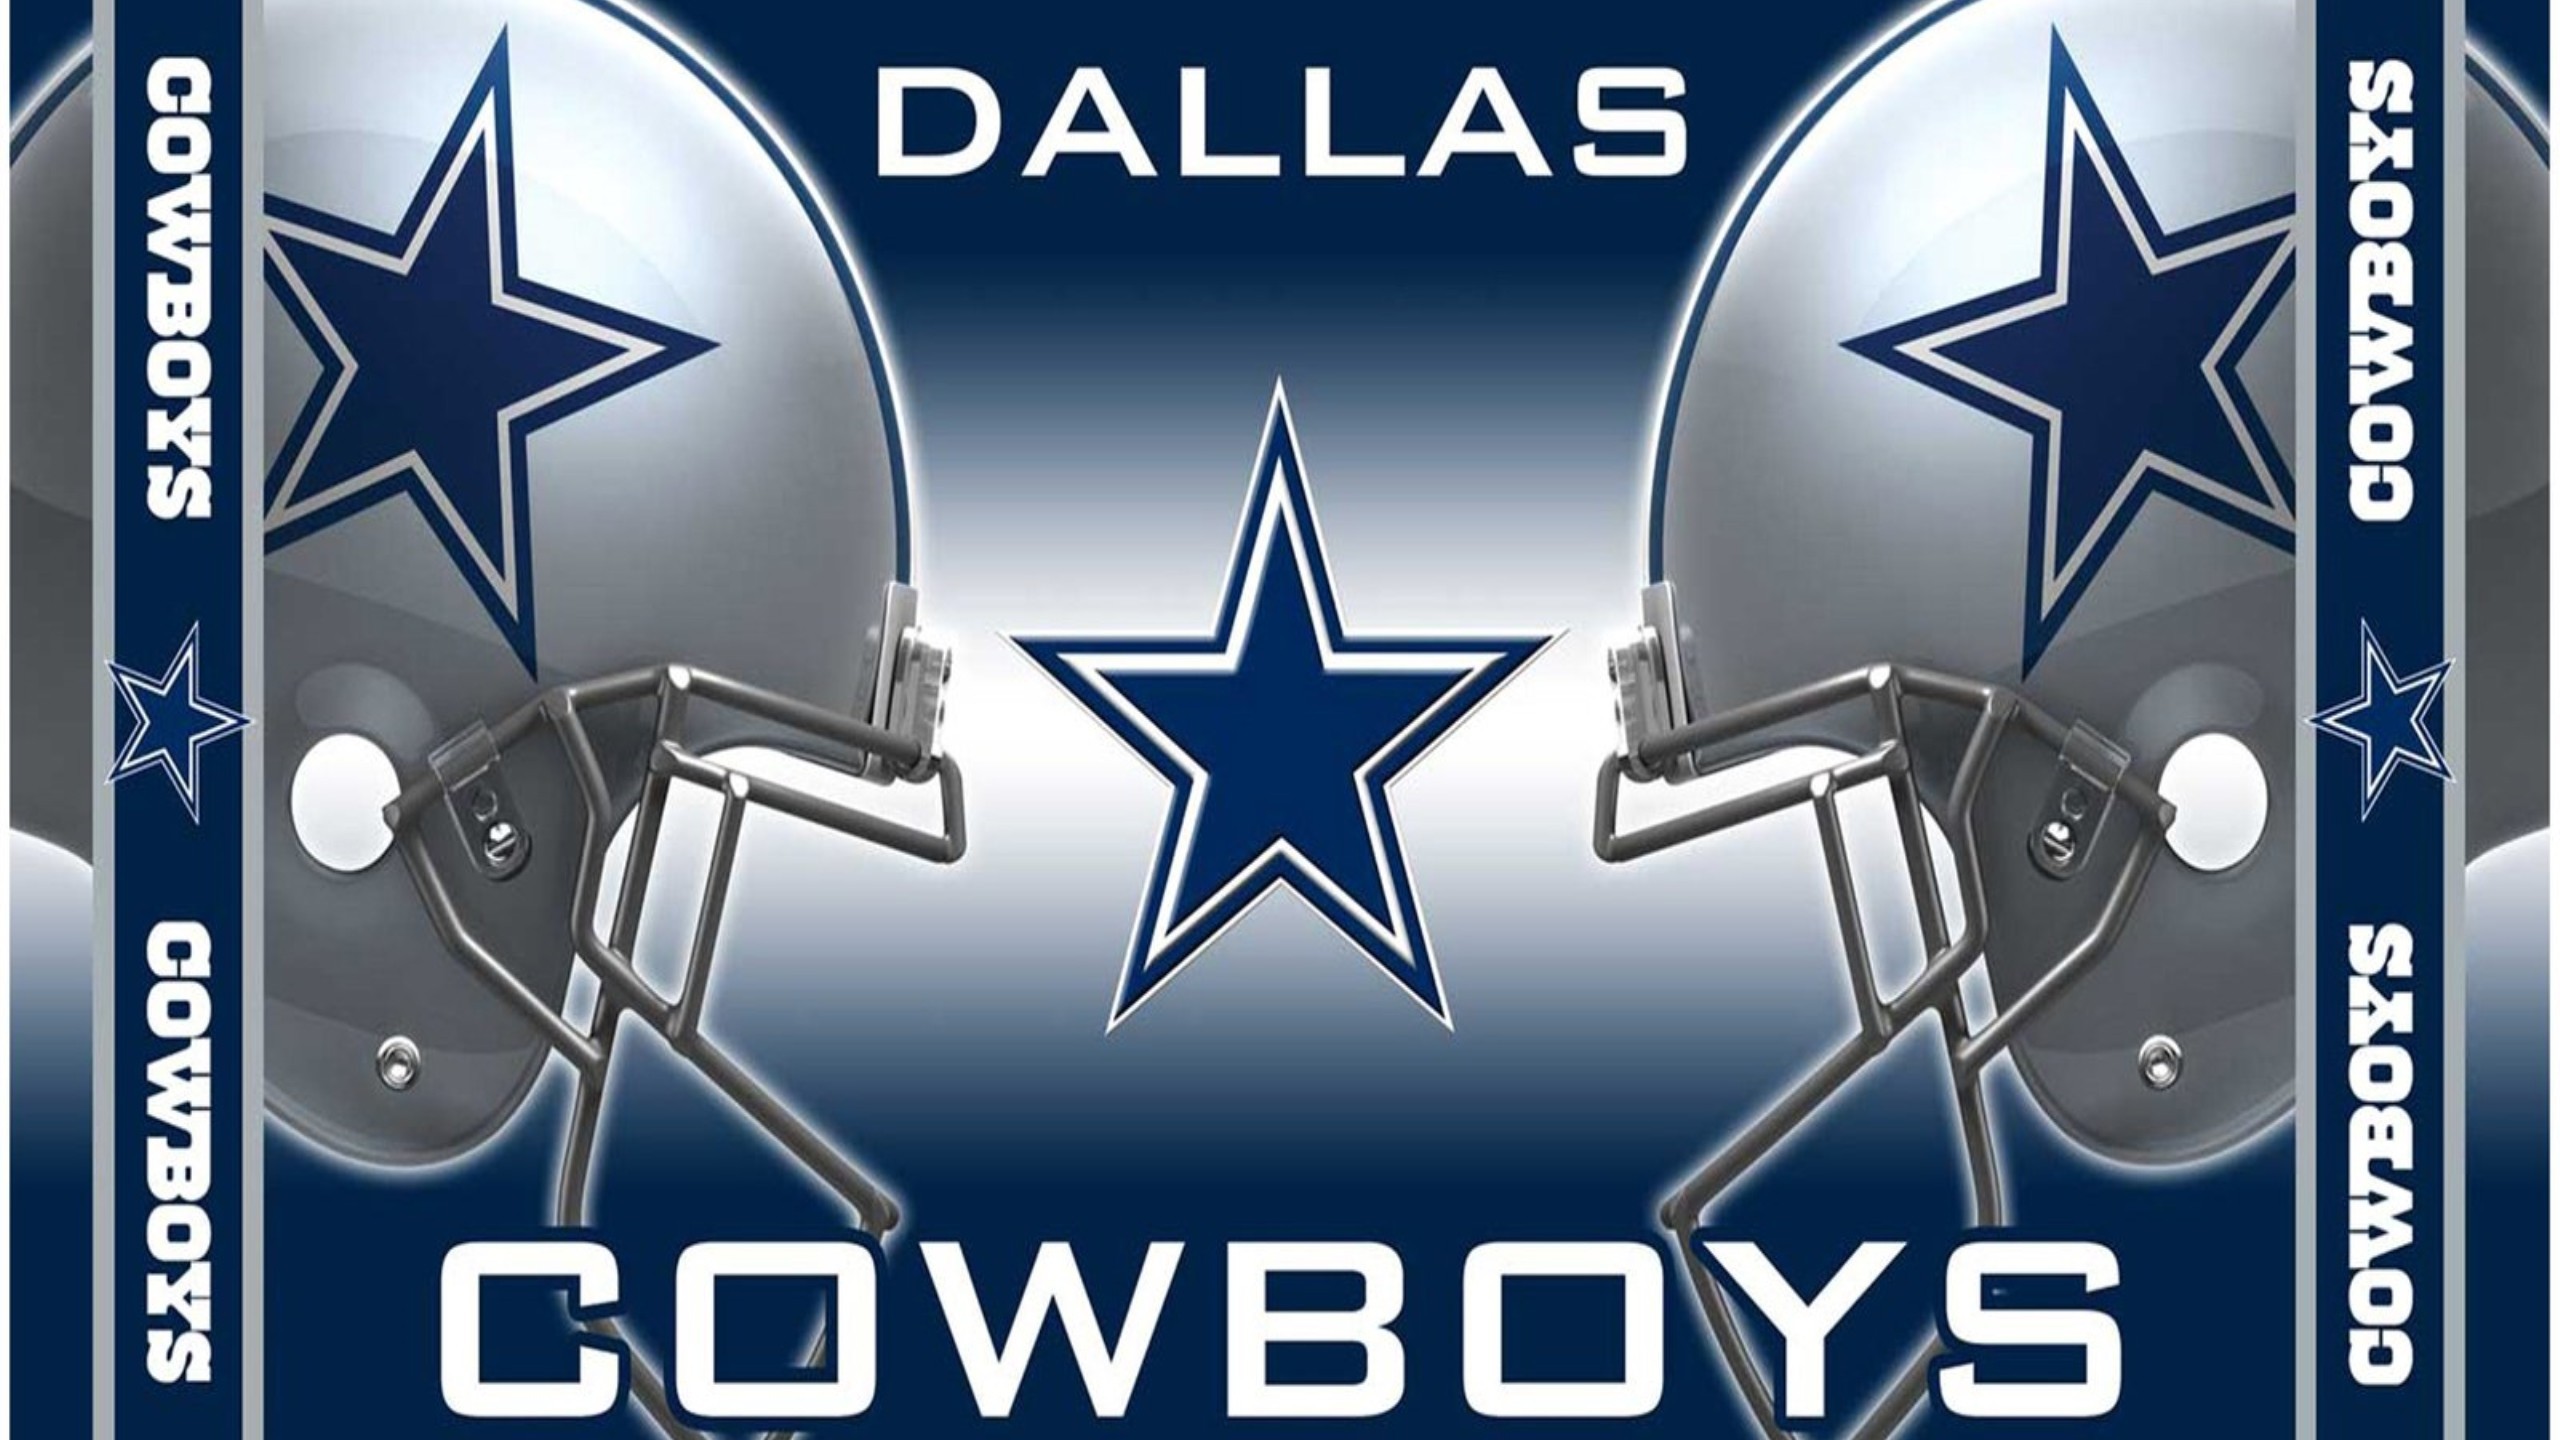 2560x1440 Dallas Cowboys Wallpapers